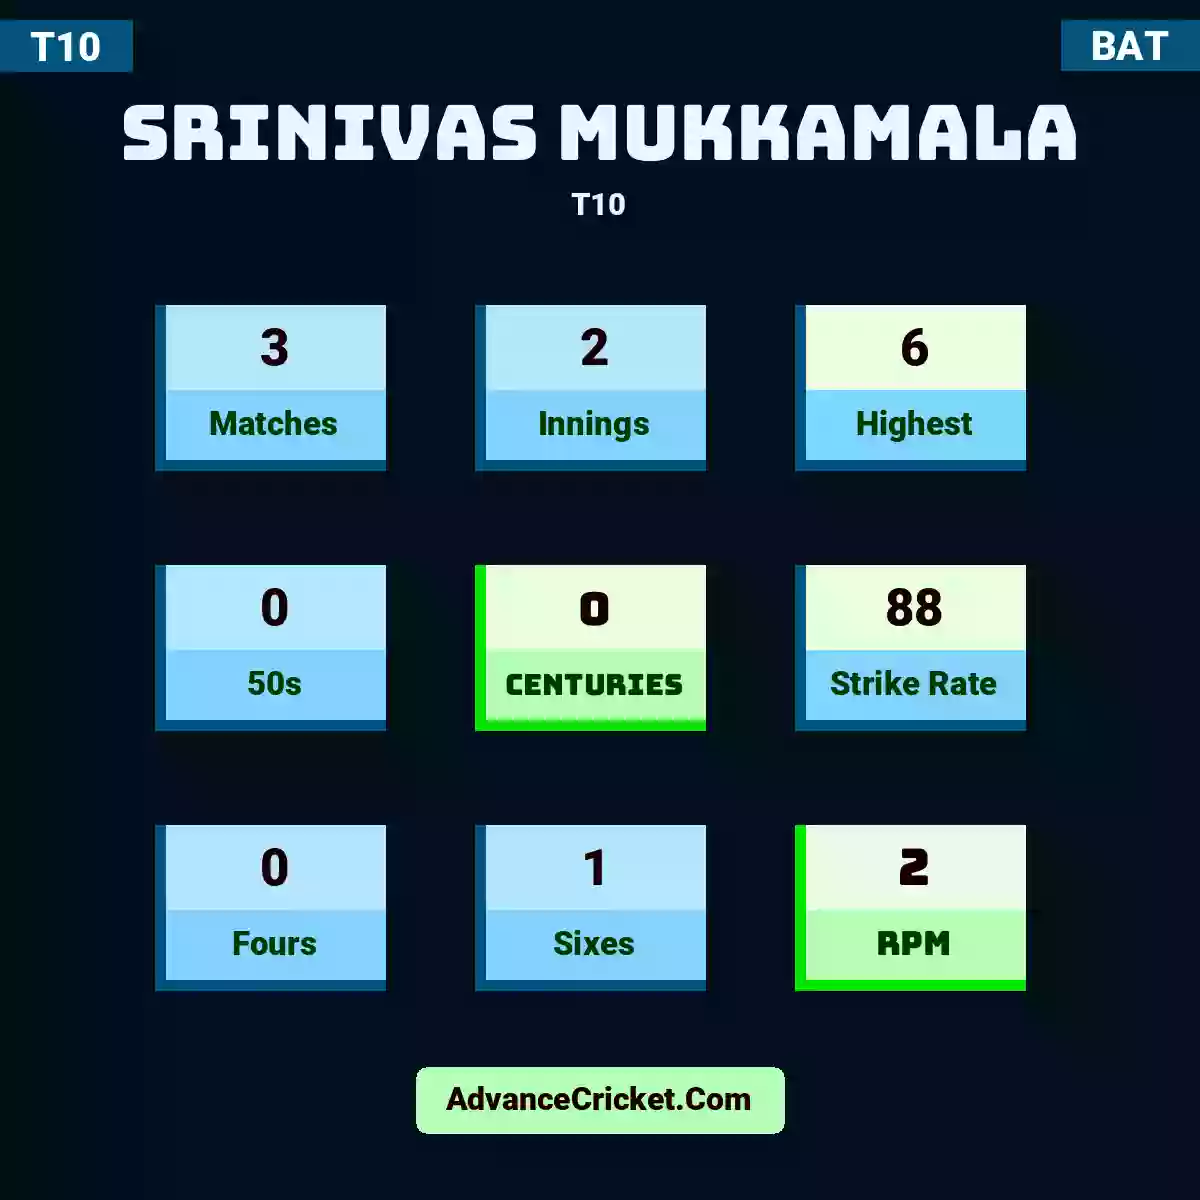 Srinivas Mukkamala T10 , Srinivas Mukkamala played 3 matches, scored 6 runs as highest, 0 half-centuries, and 0 centuries, with a strike rate of 88. S.Mukkamala hit 0 fours and 1 sixes, with an RPM of 2.